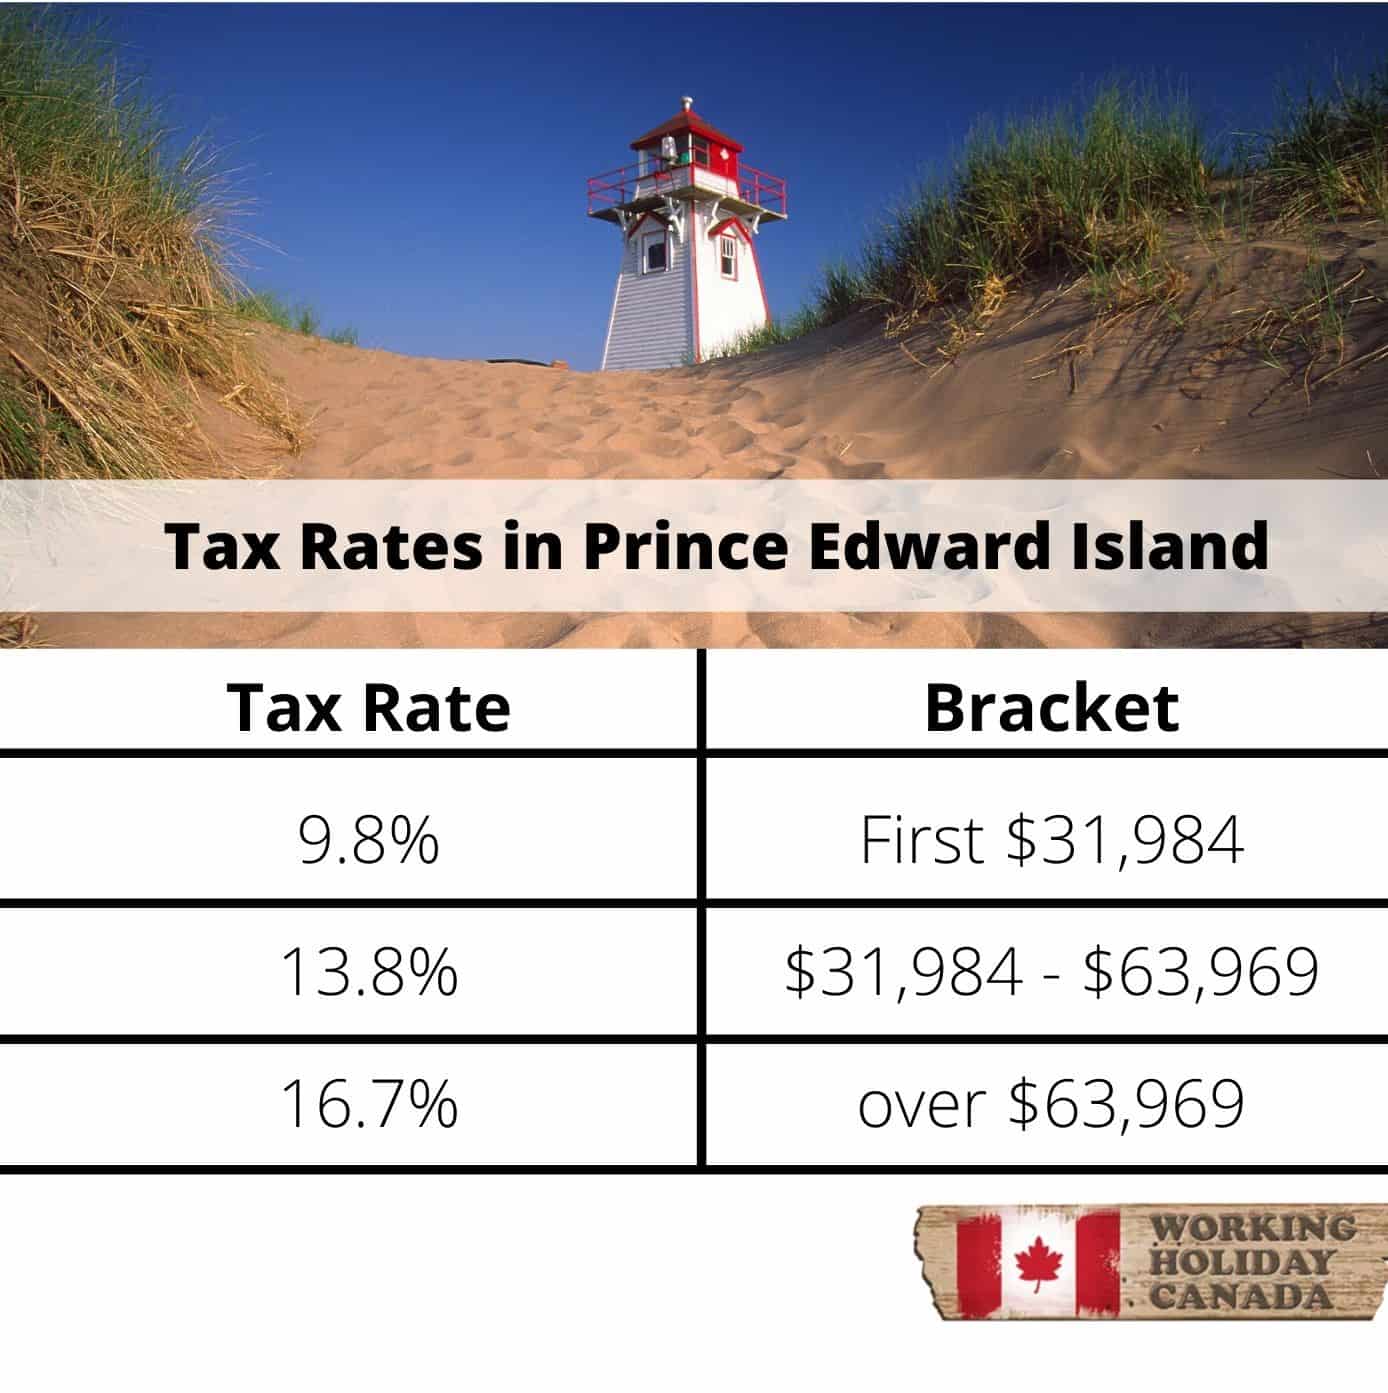 Prince Edward Island tax rates